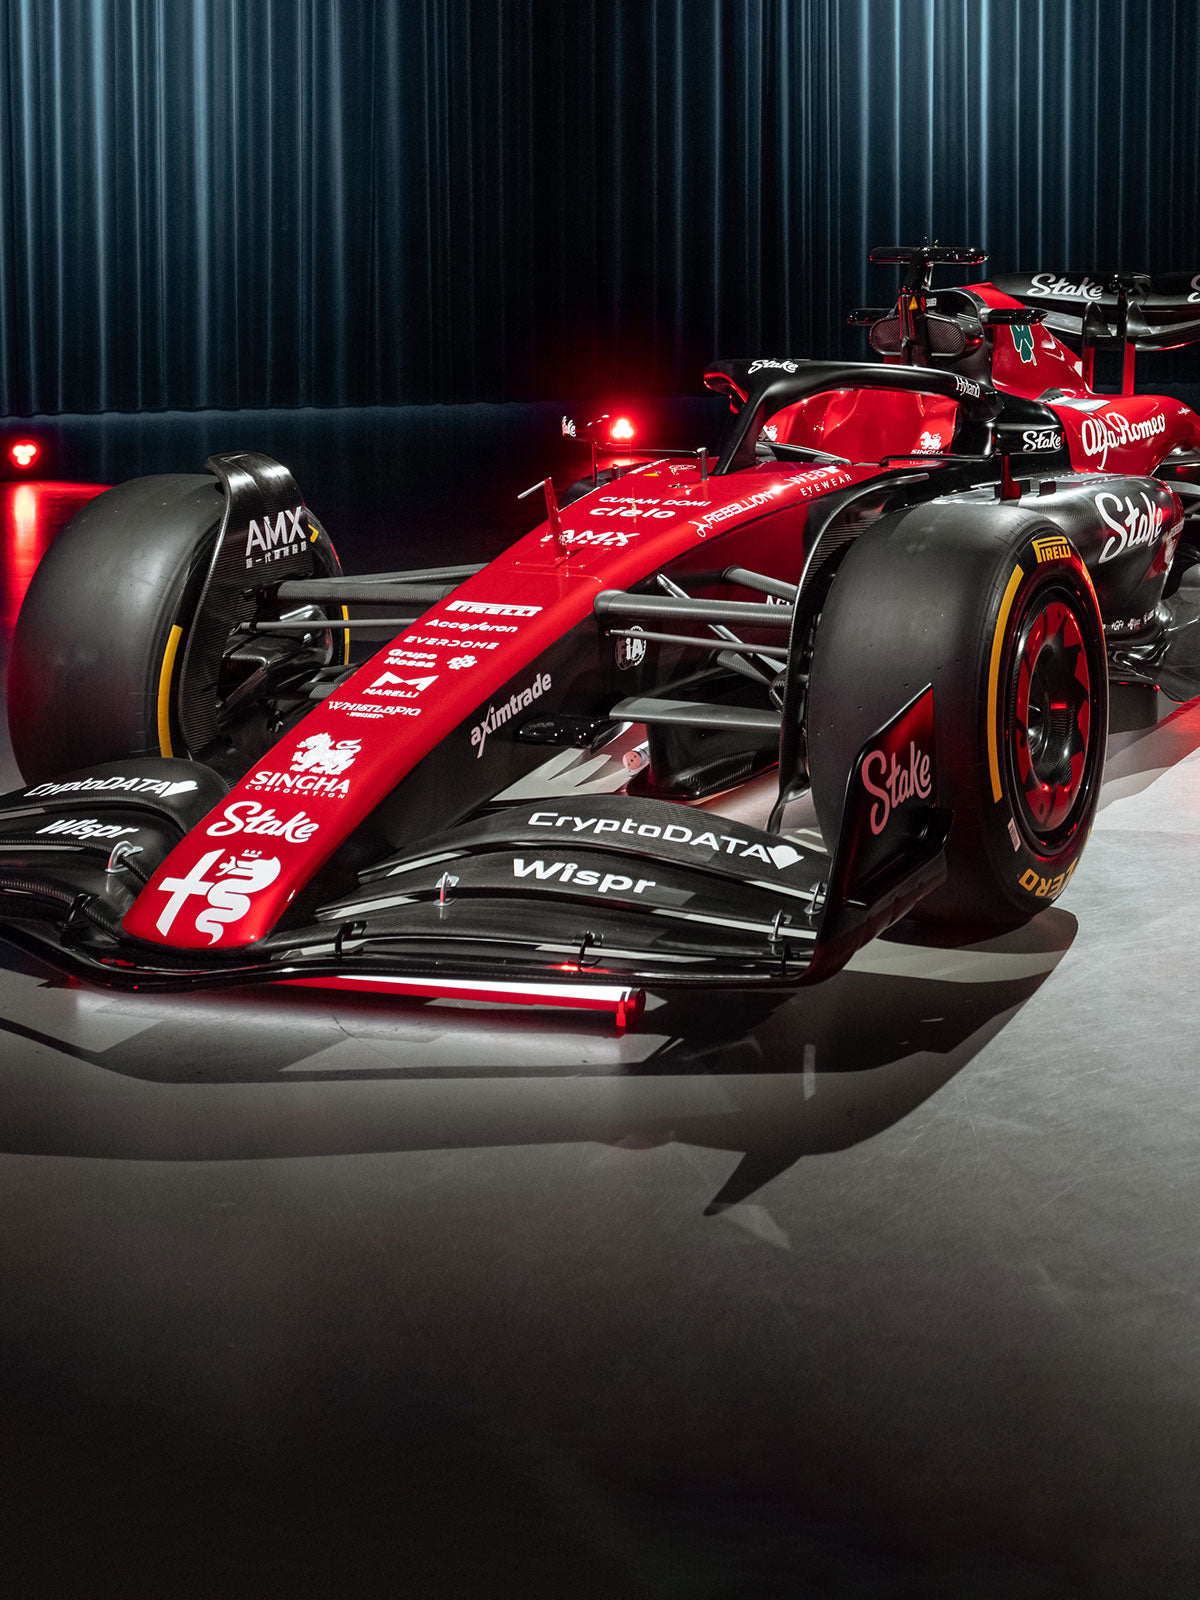 Stock Car: Shell apresenta layout dos carros da temporada 2022